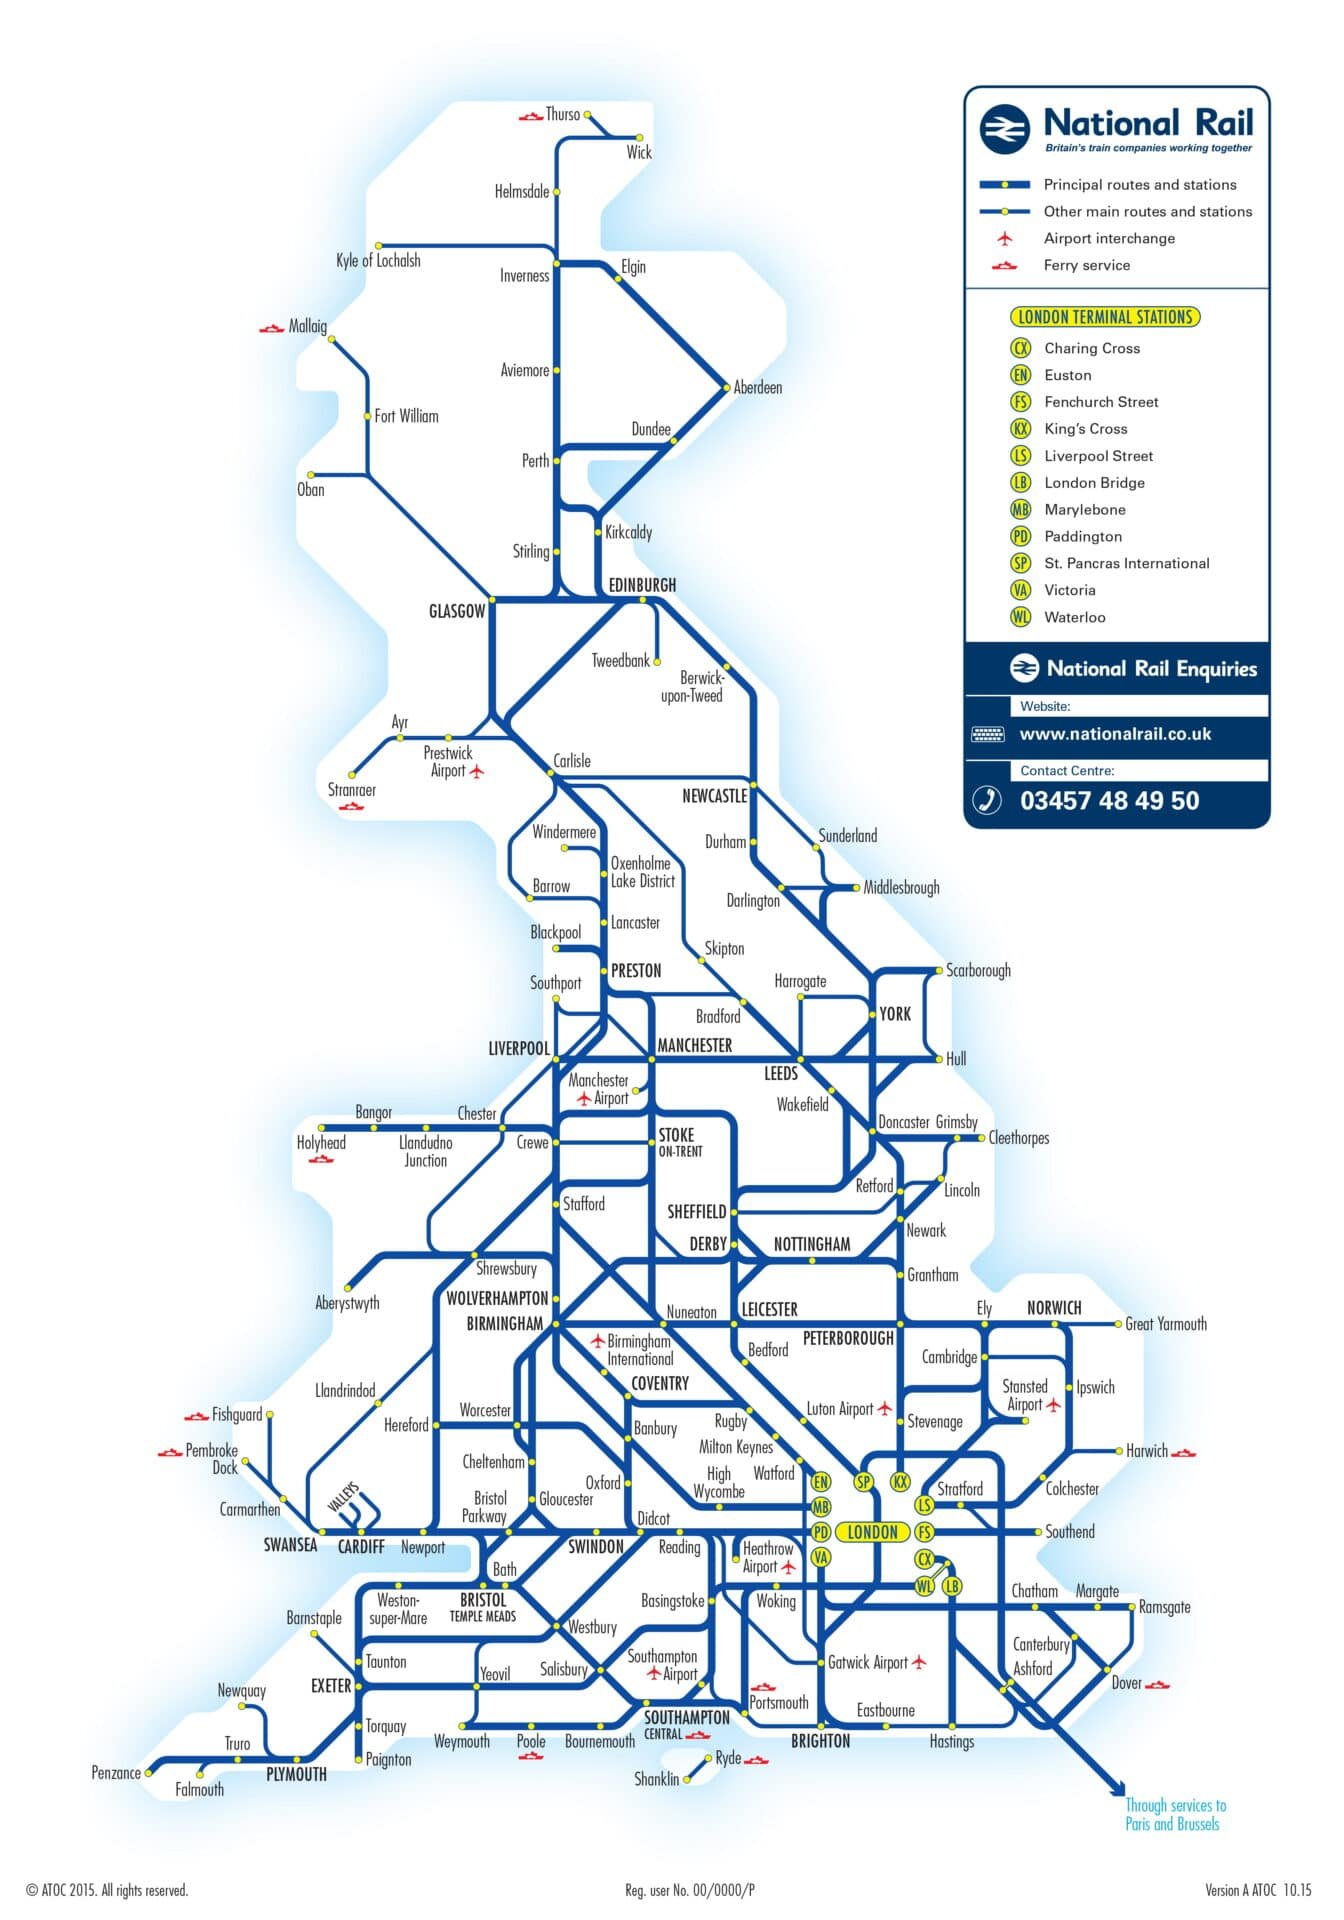 Britain's National Rail network